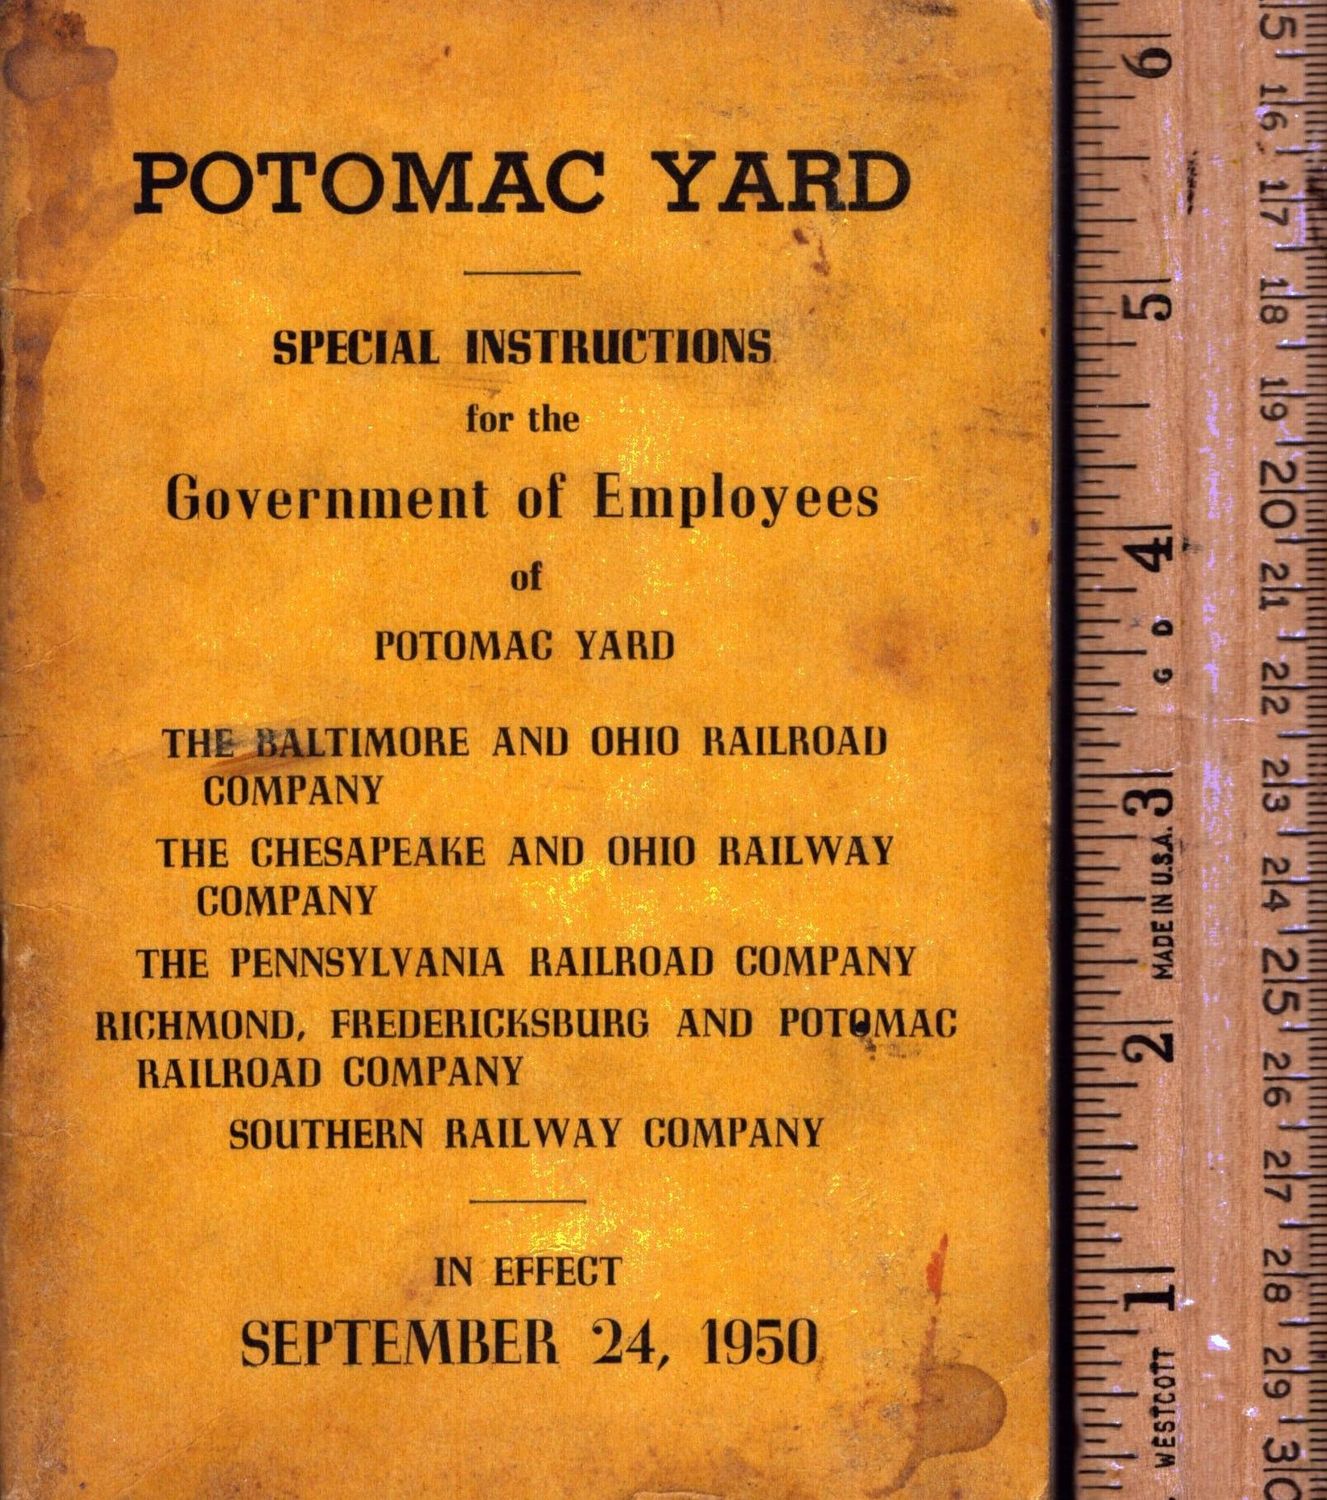 Richmond Fredericksburg and Potomac Potomac Yard Special Instructions 1950